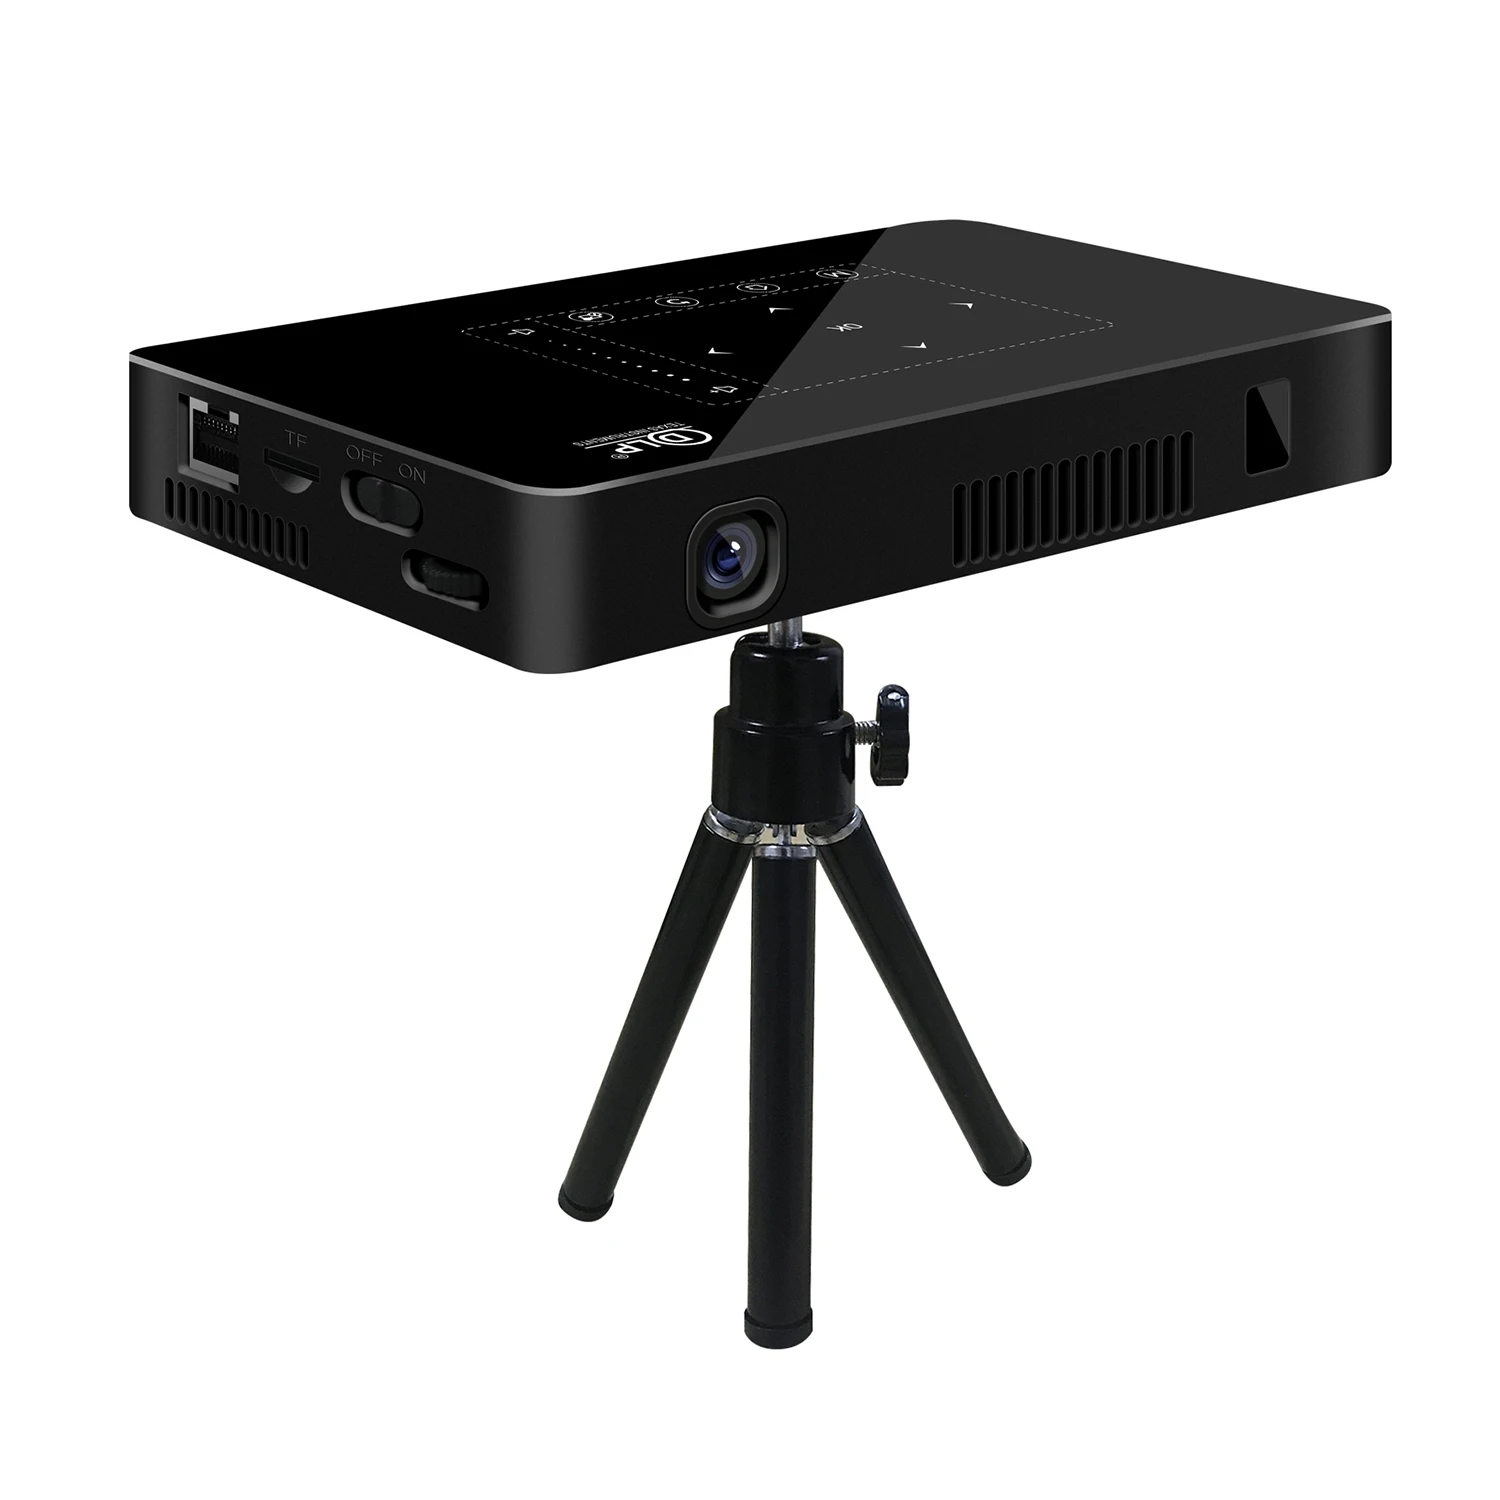 

sale New P10 DLP Mini Pocket projector (WVGA 854*480) Outdoor Home Use Mini Projectors 3D LCD Video Projector, Black